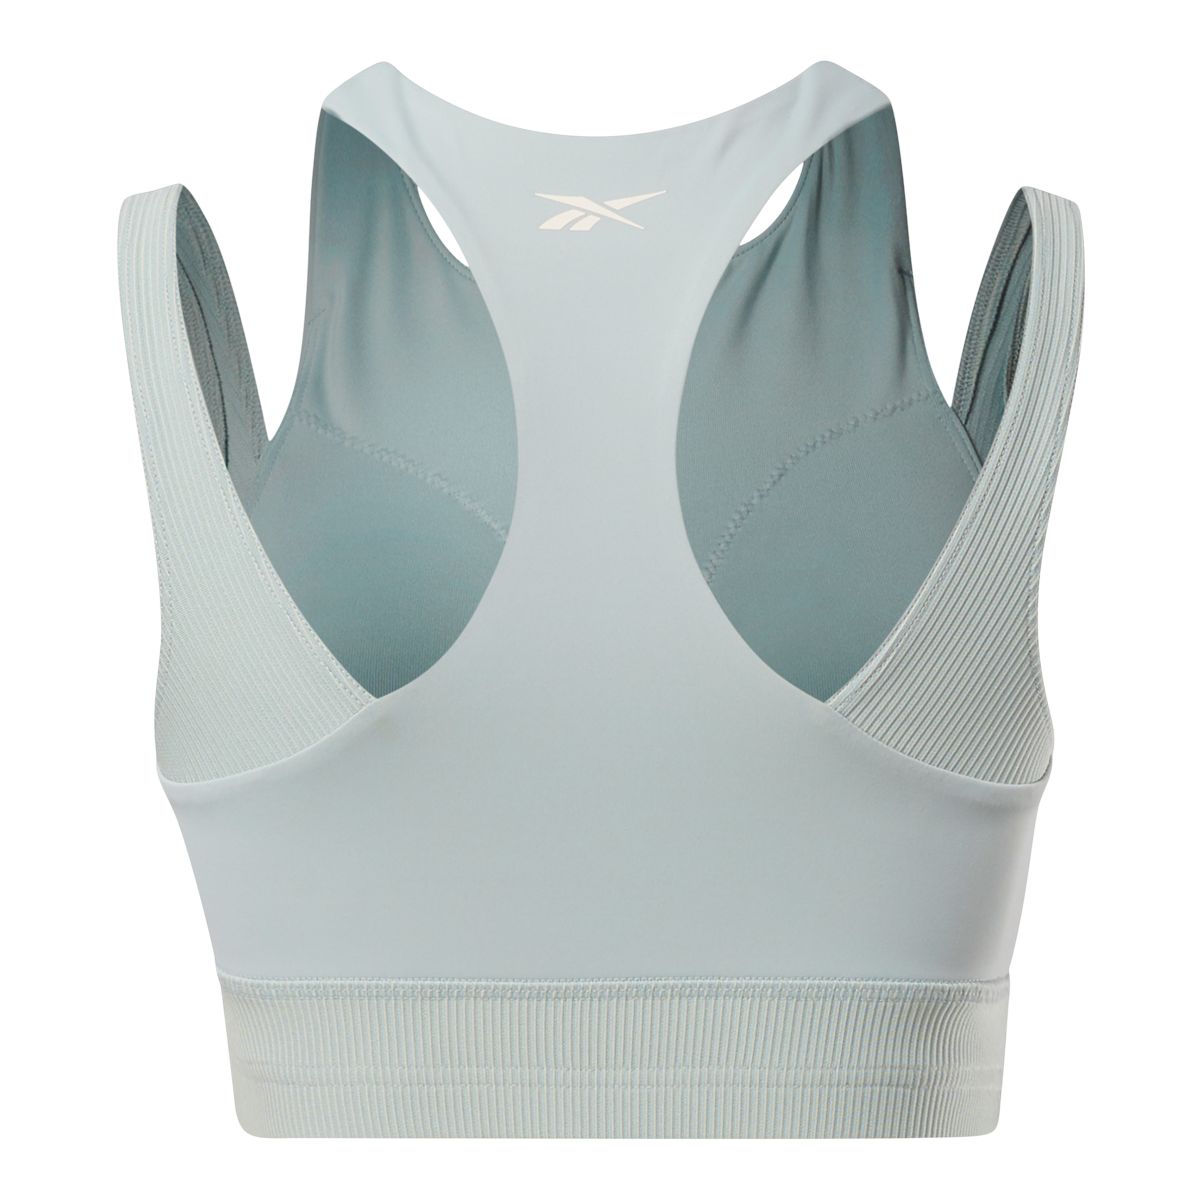 Reebok Training Studio light-support sports bra in grey